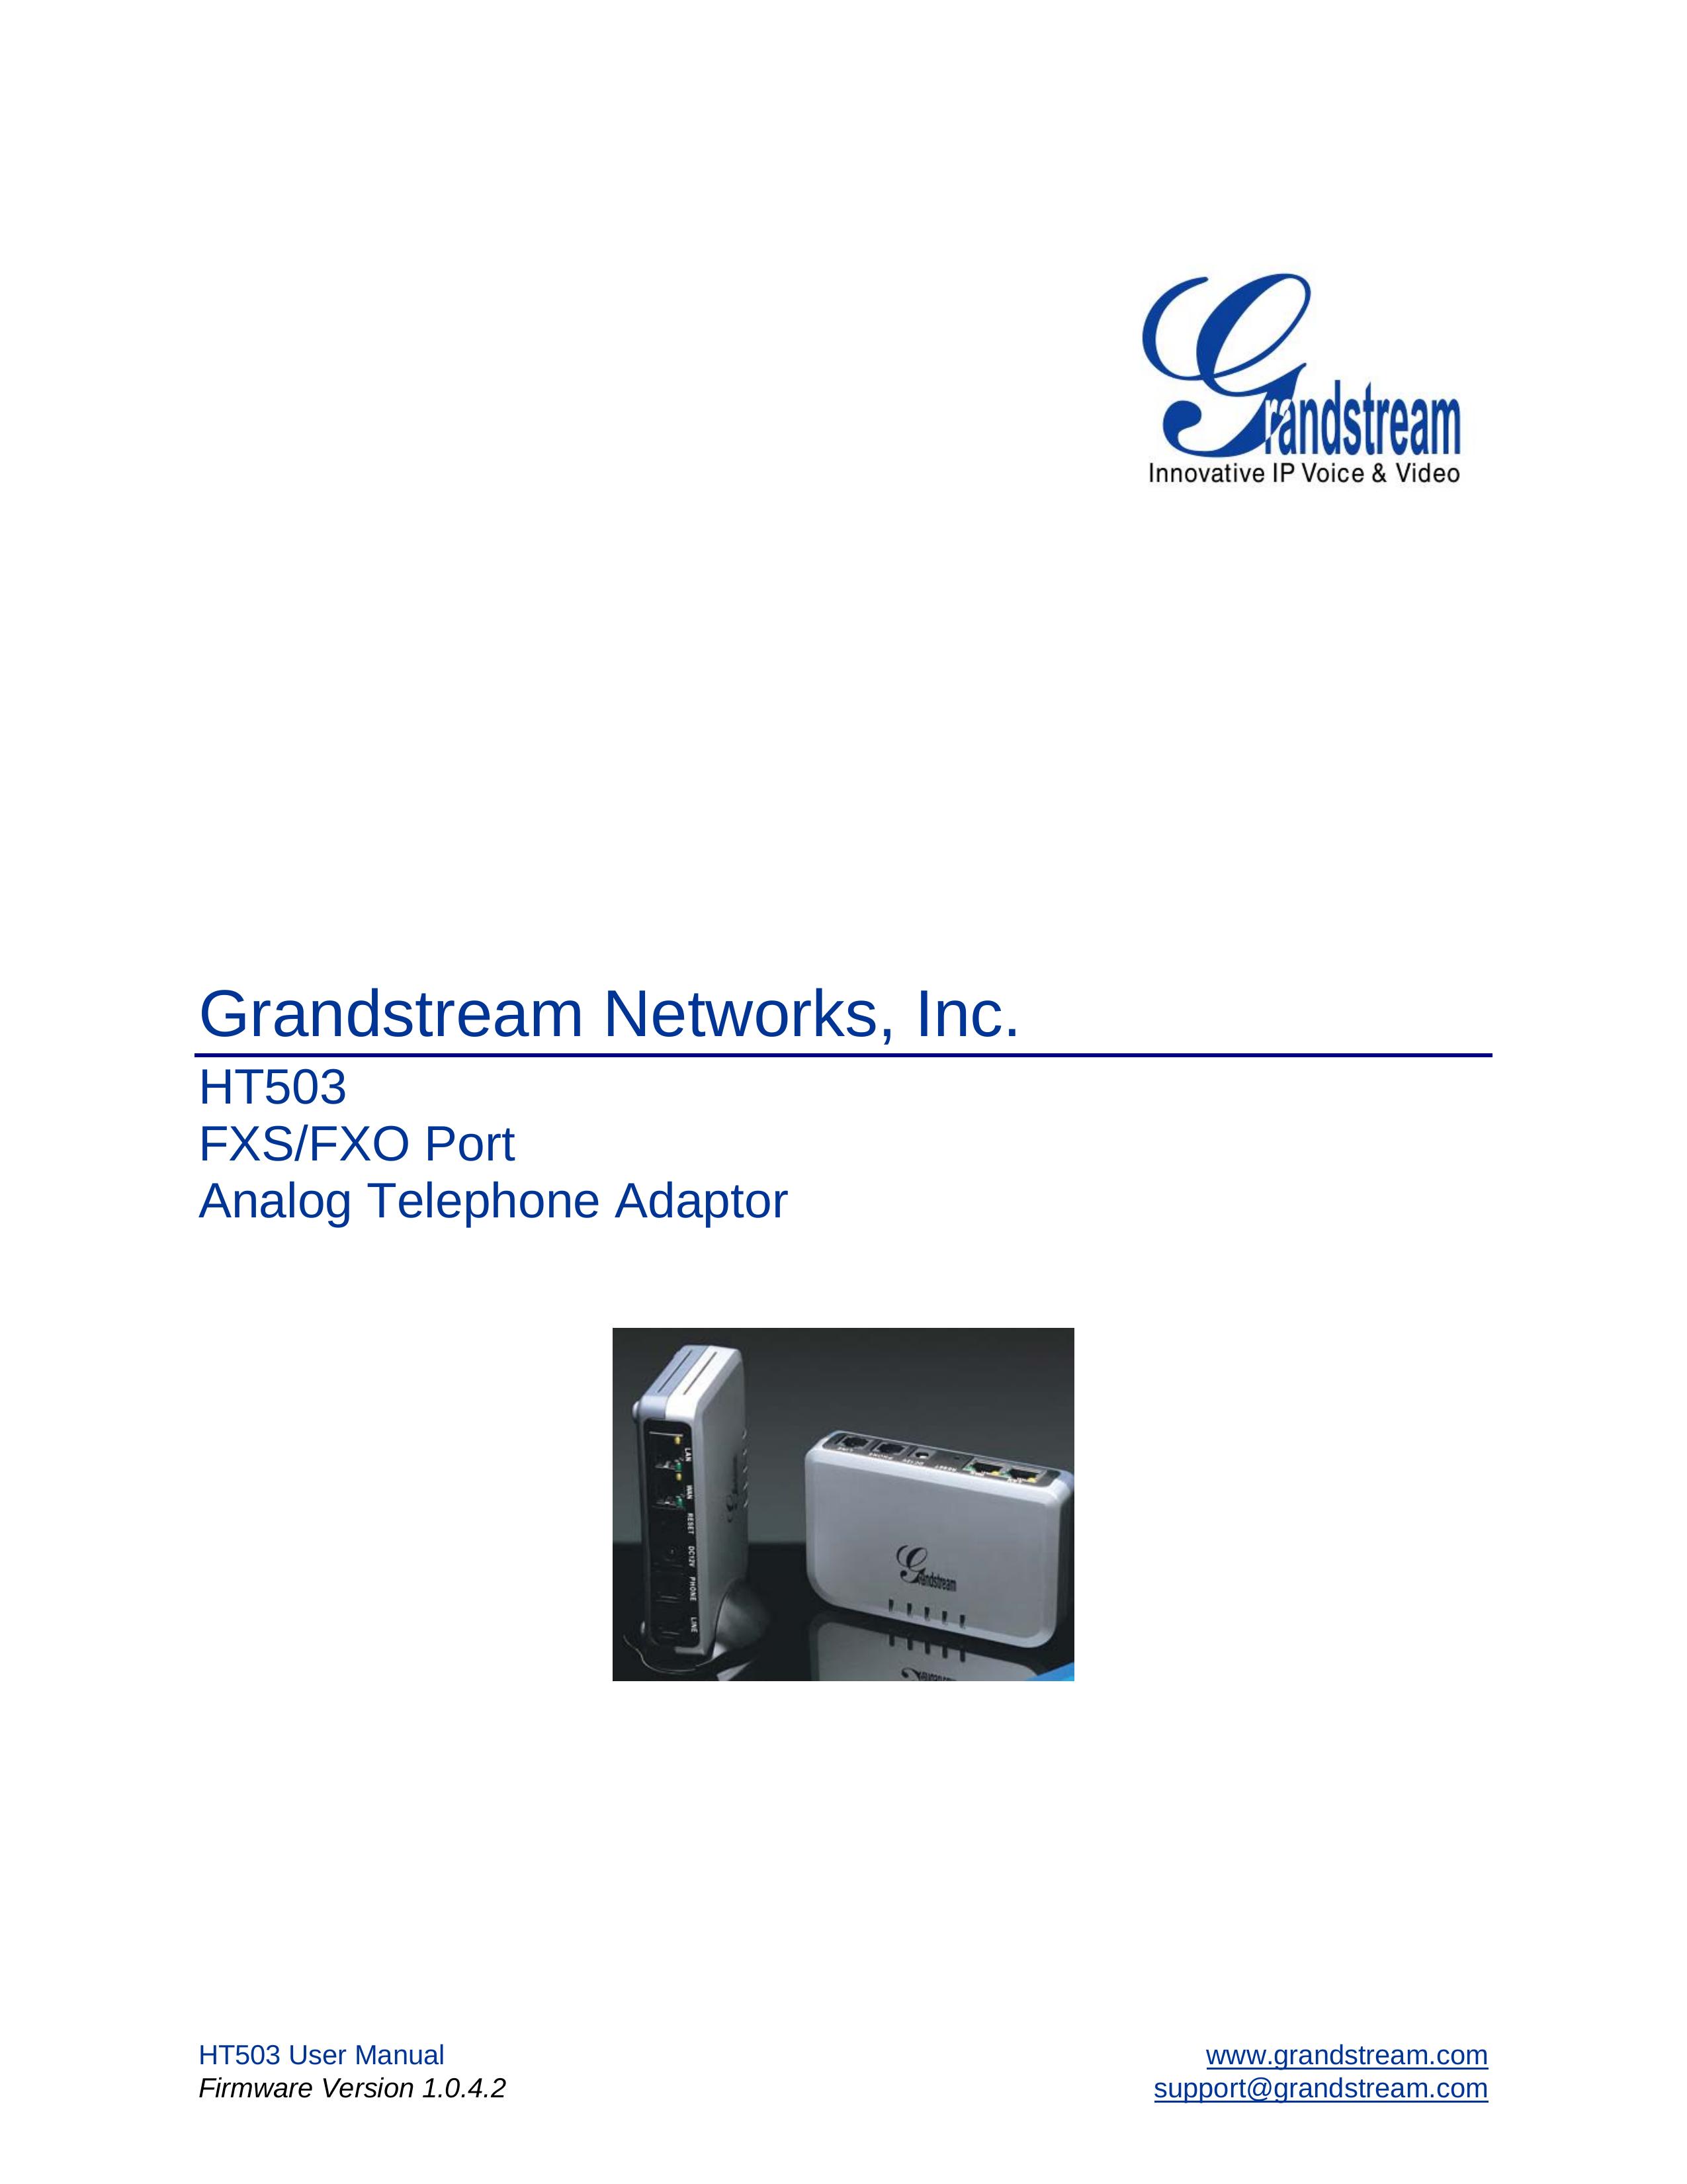 Grandstream Networks HT503 Washer/Dryer User Manual